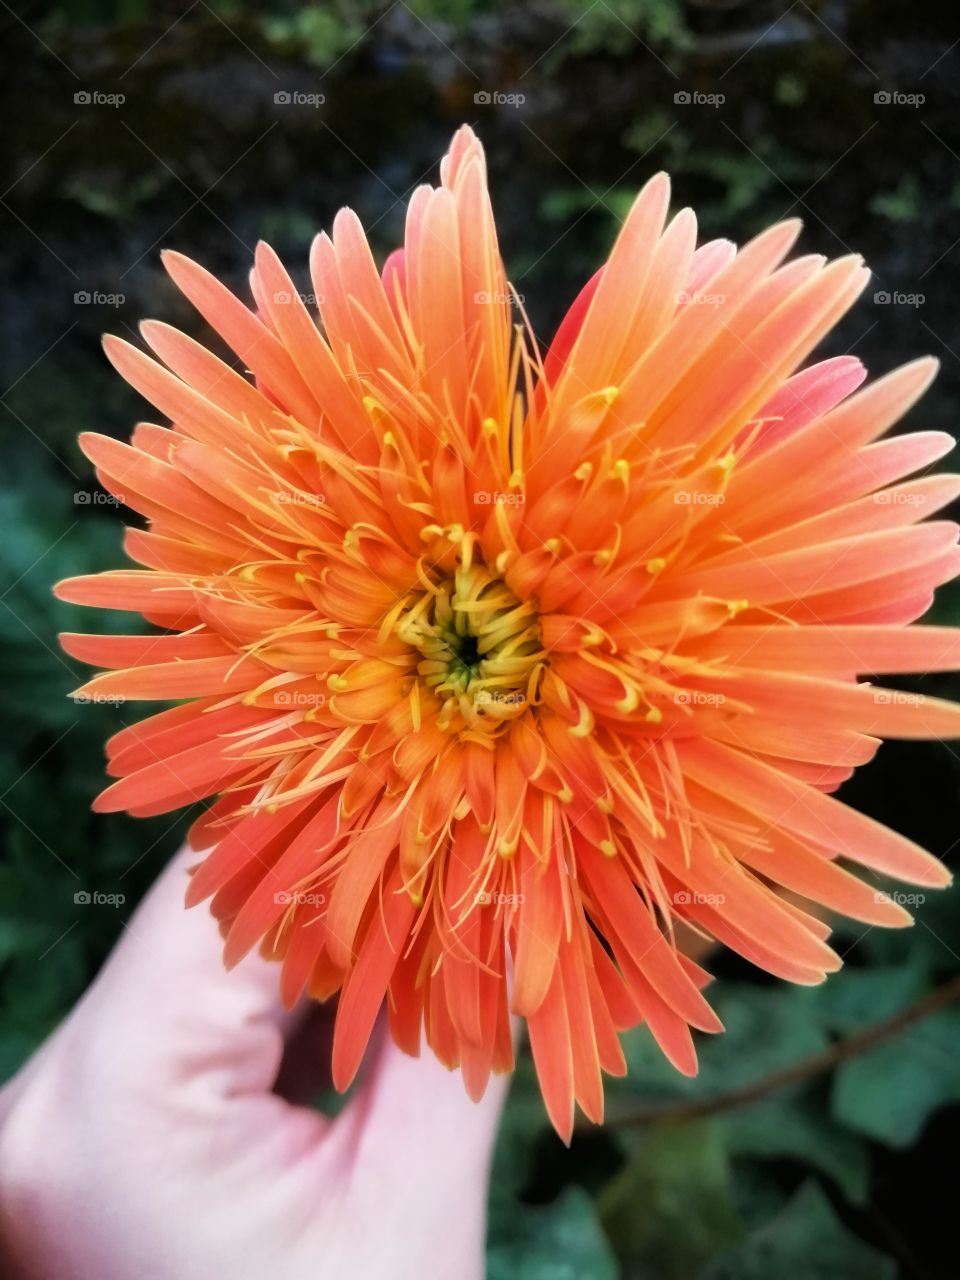 Hand holding a beautiful orange daisy flower.